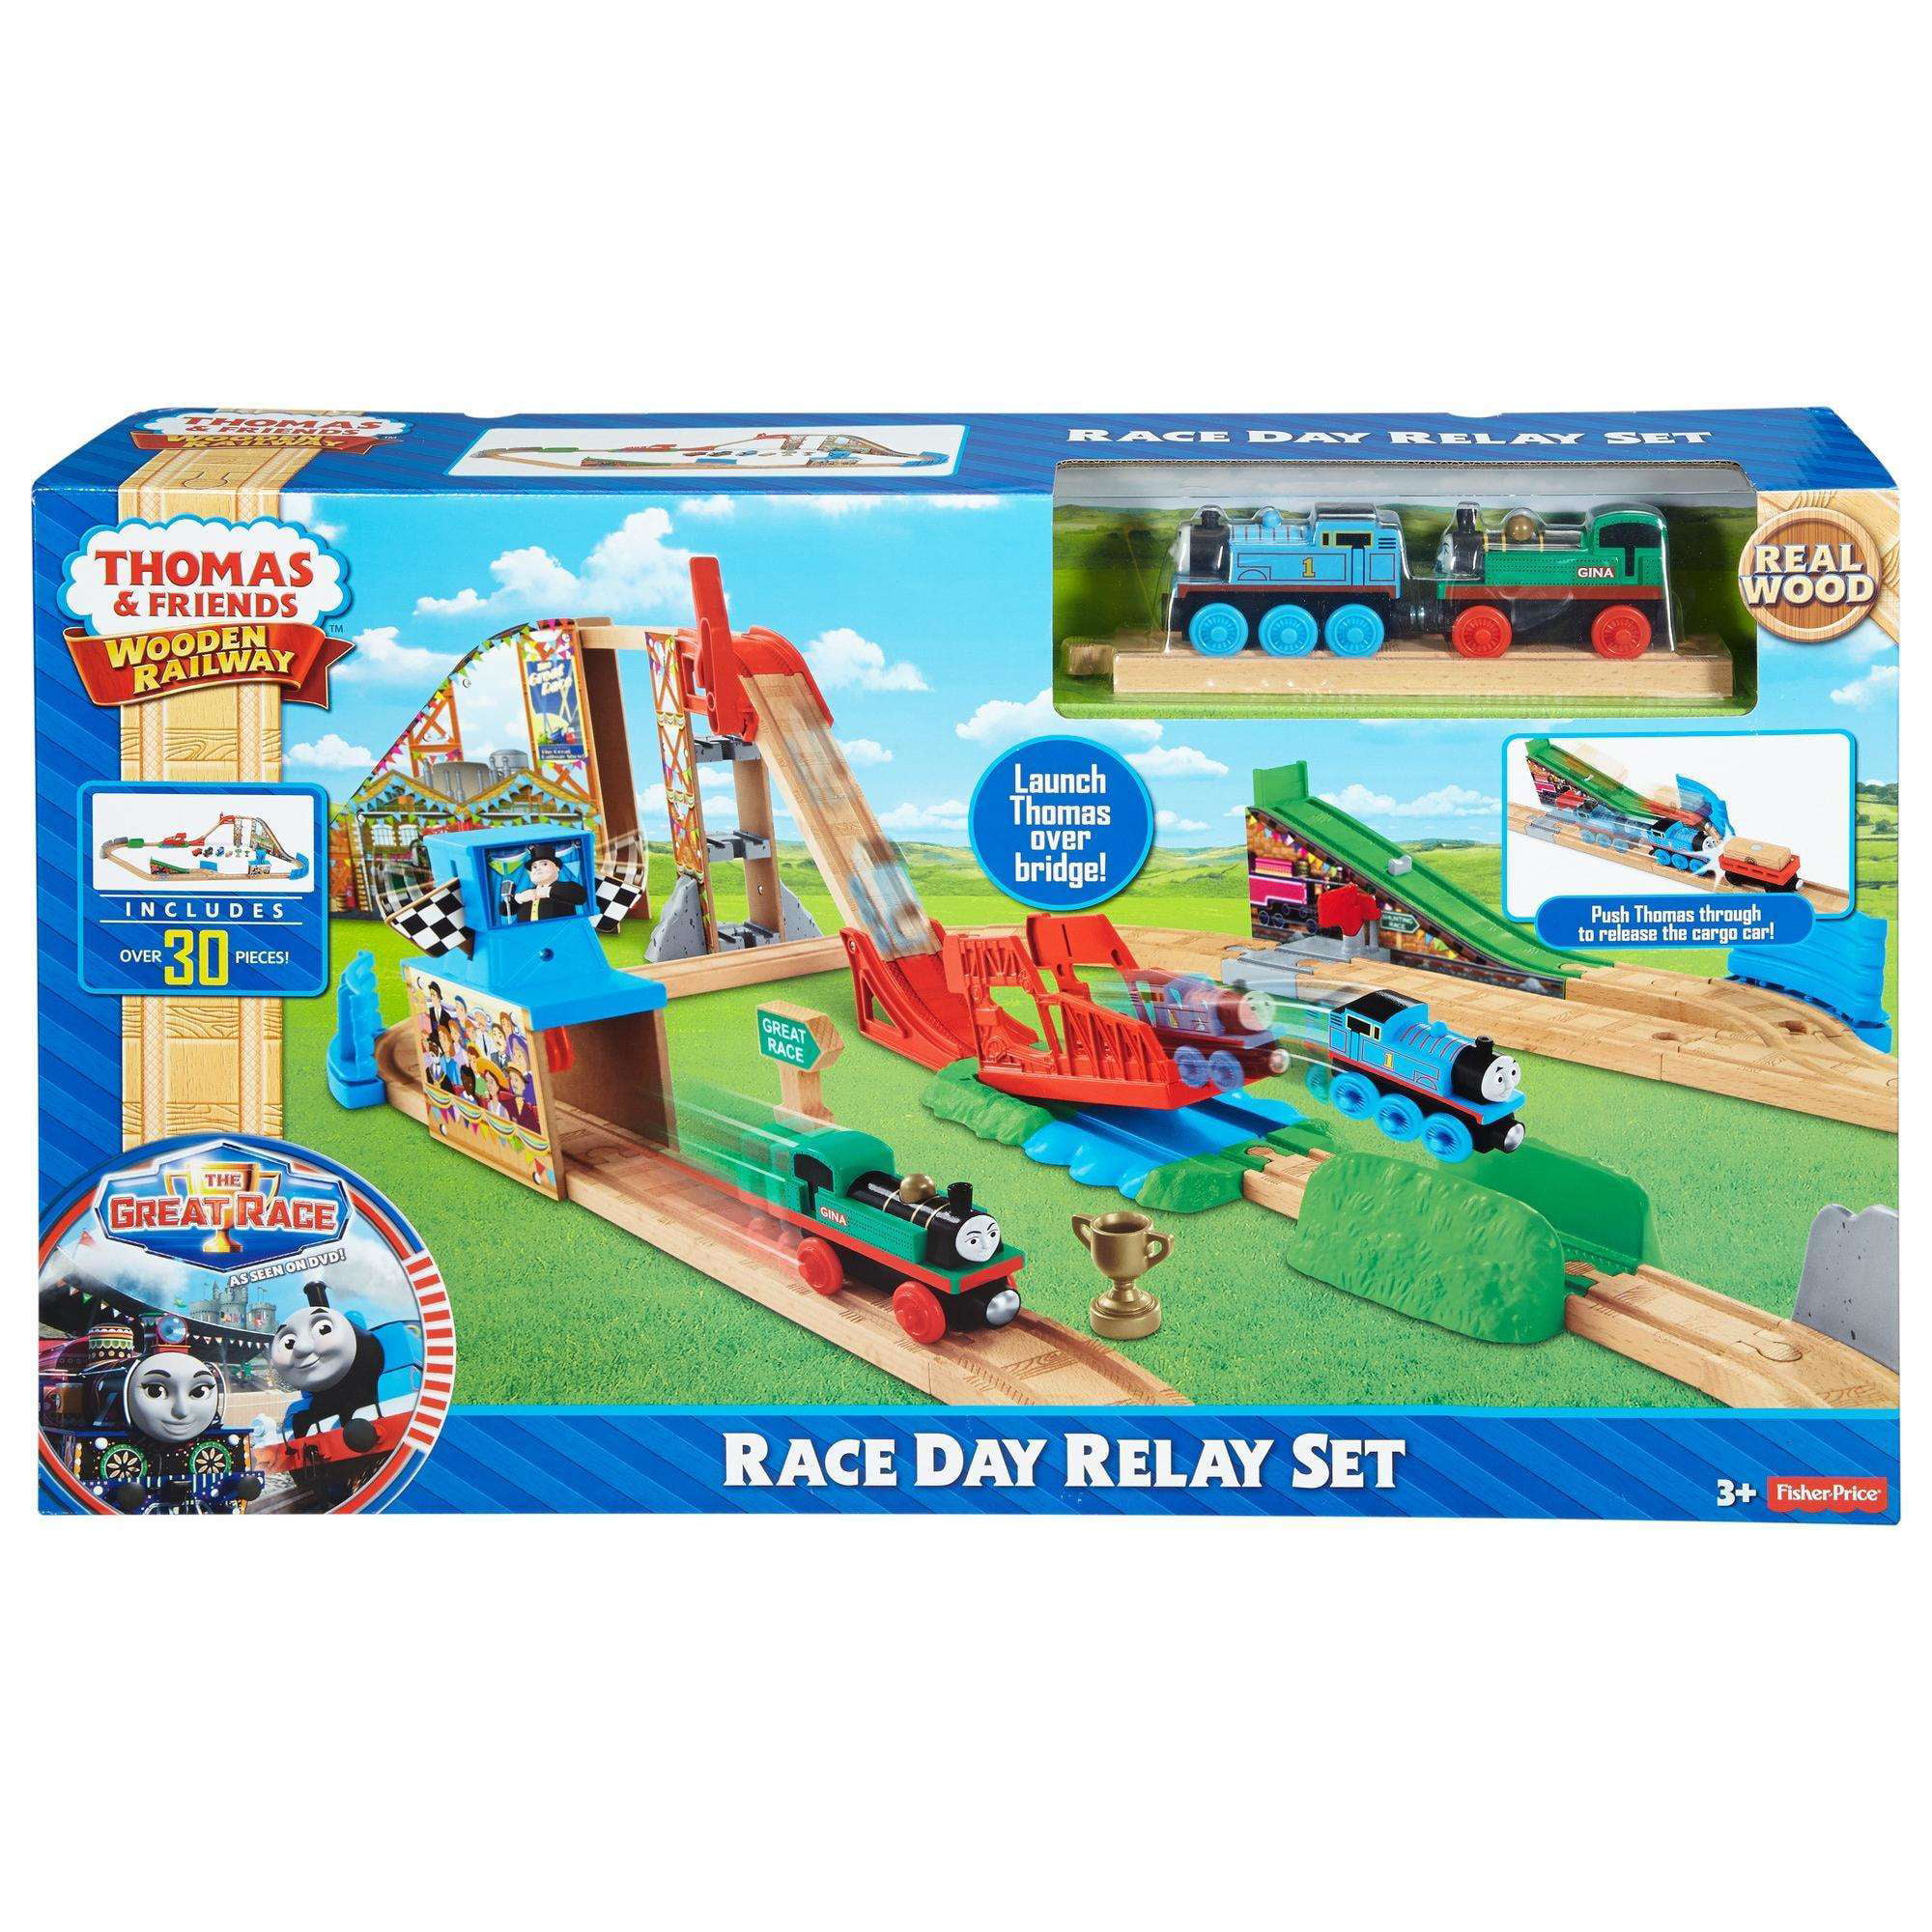 Thomas & Friends Wooden Railway Race Day Relay Set - Walmart.com